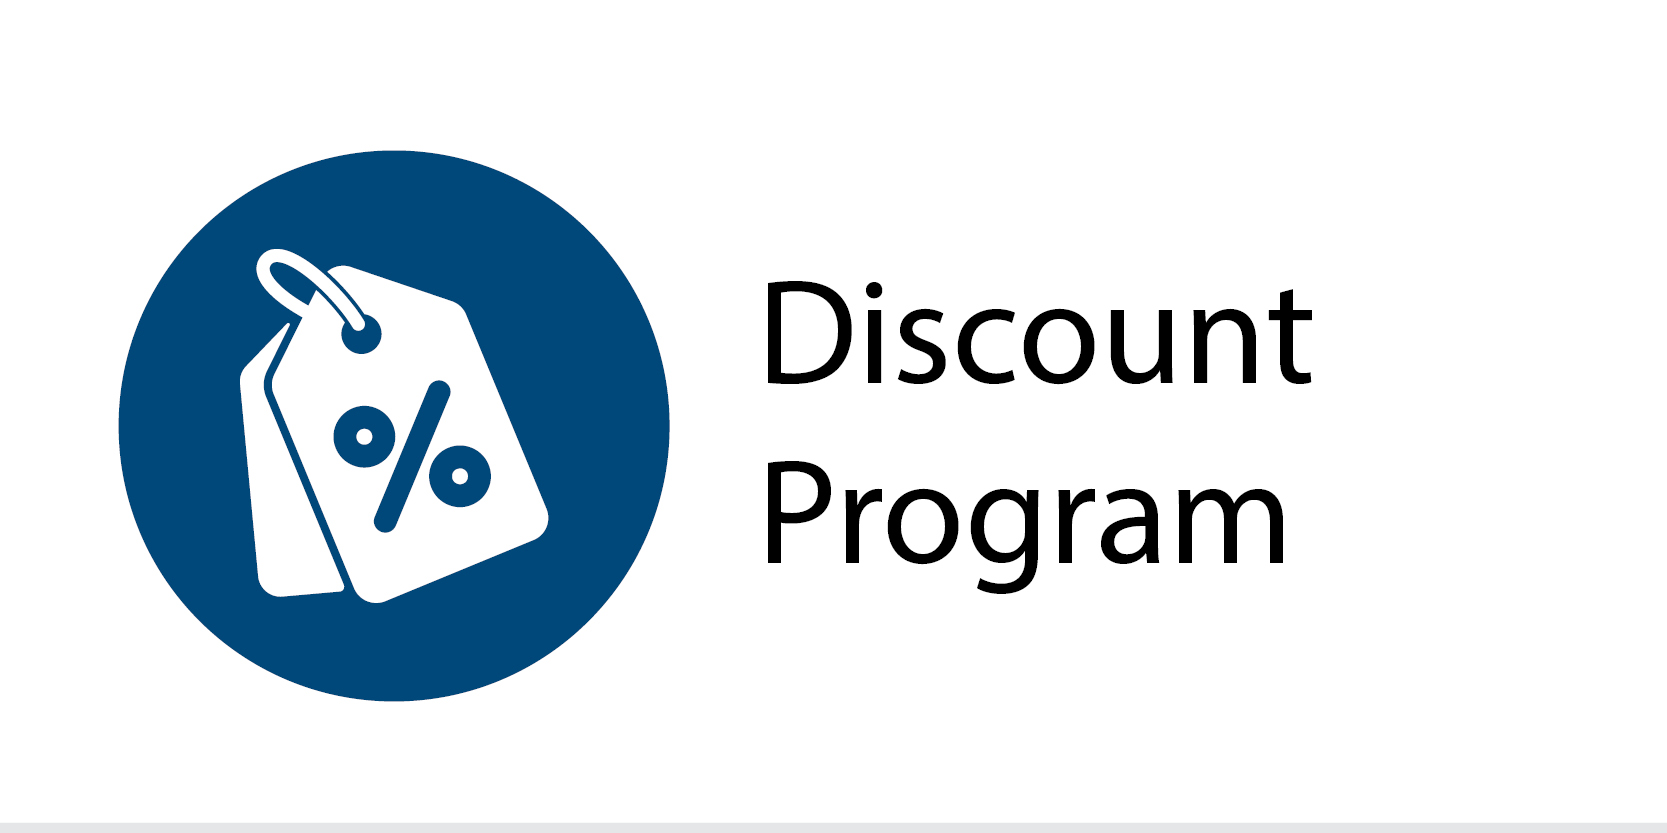 Discount+Program